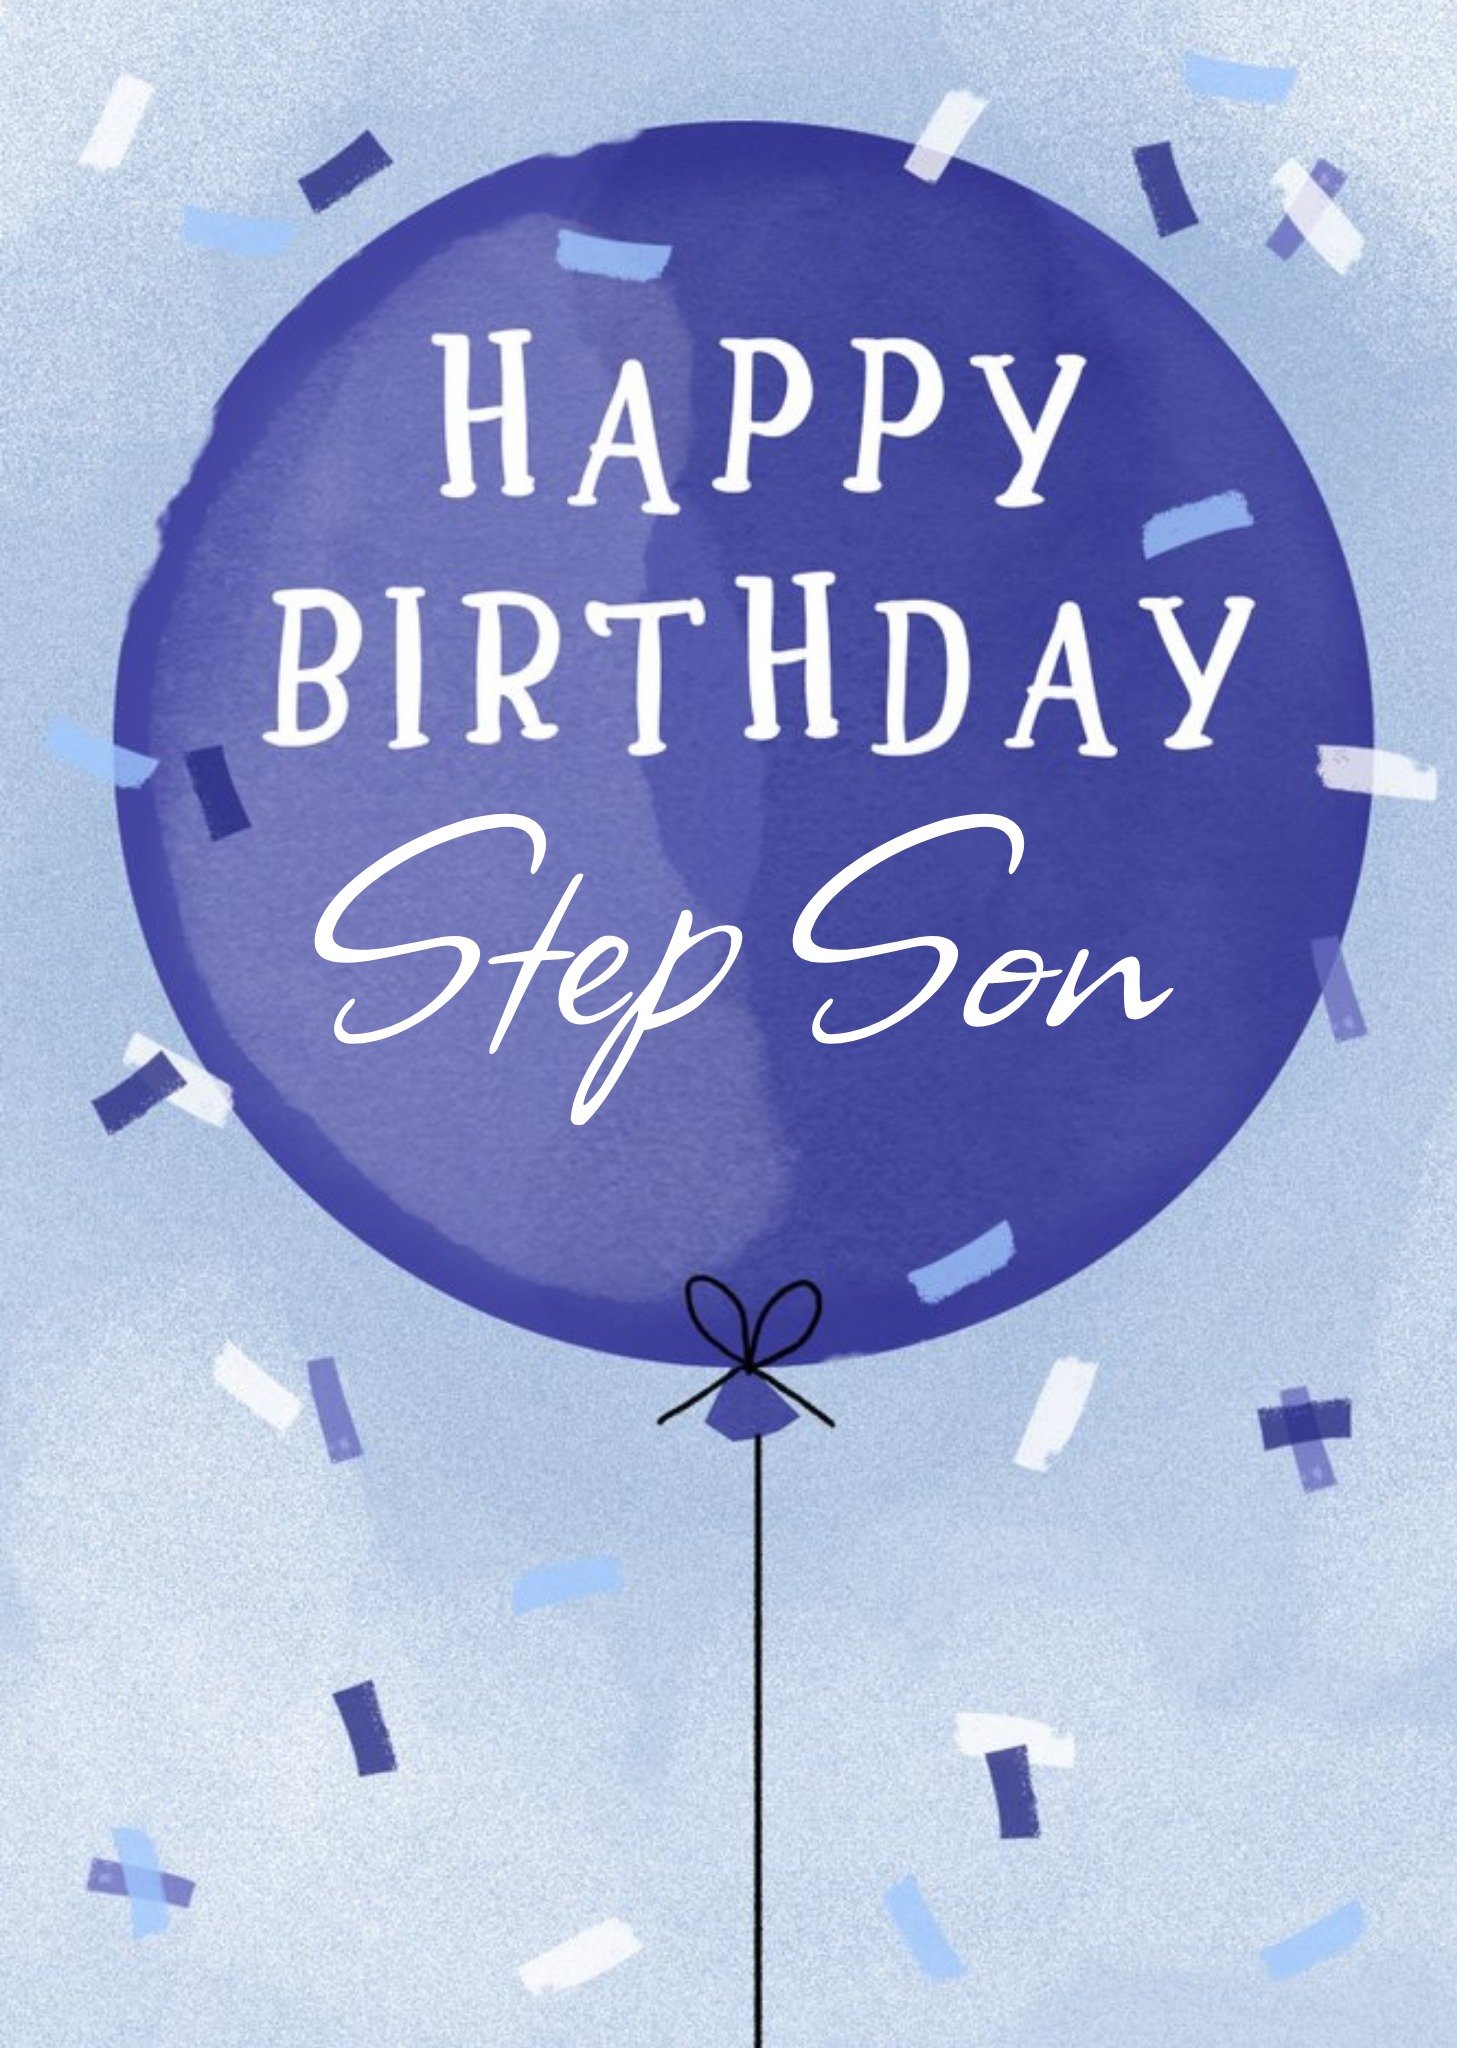 Making Meadows Okey Dokey Illustrated Balloon Happy Birthday Step Son Birthday Card, Large